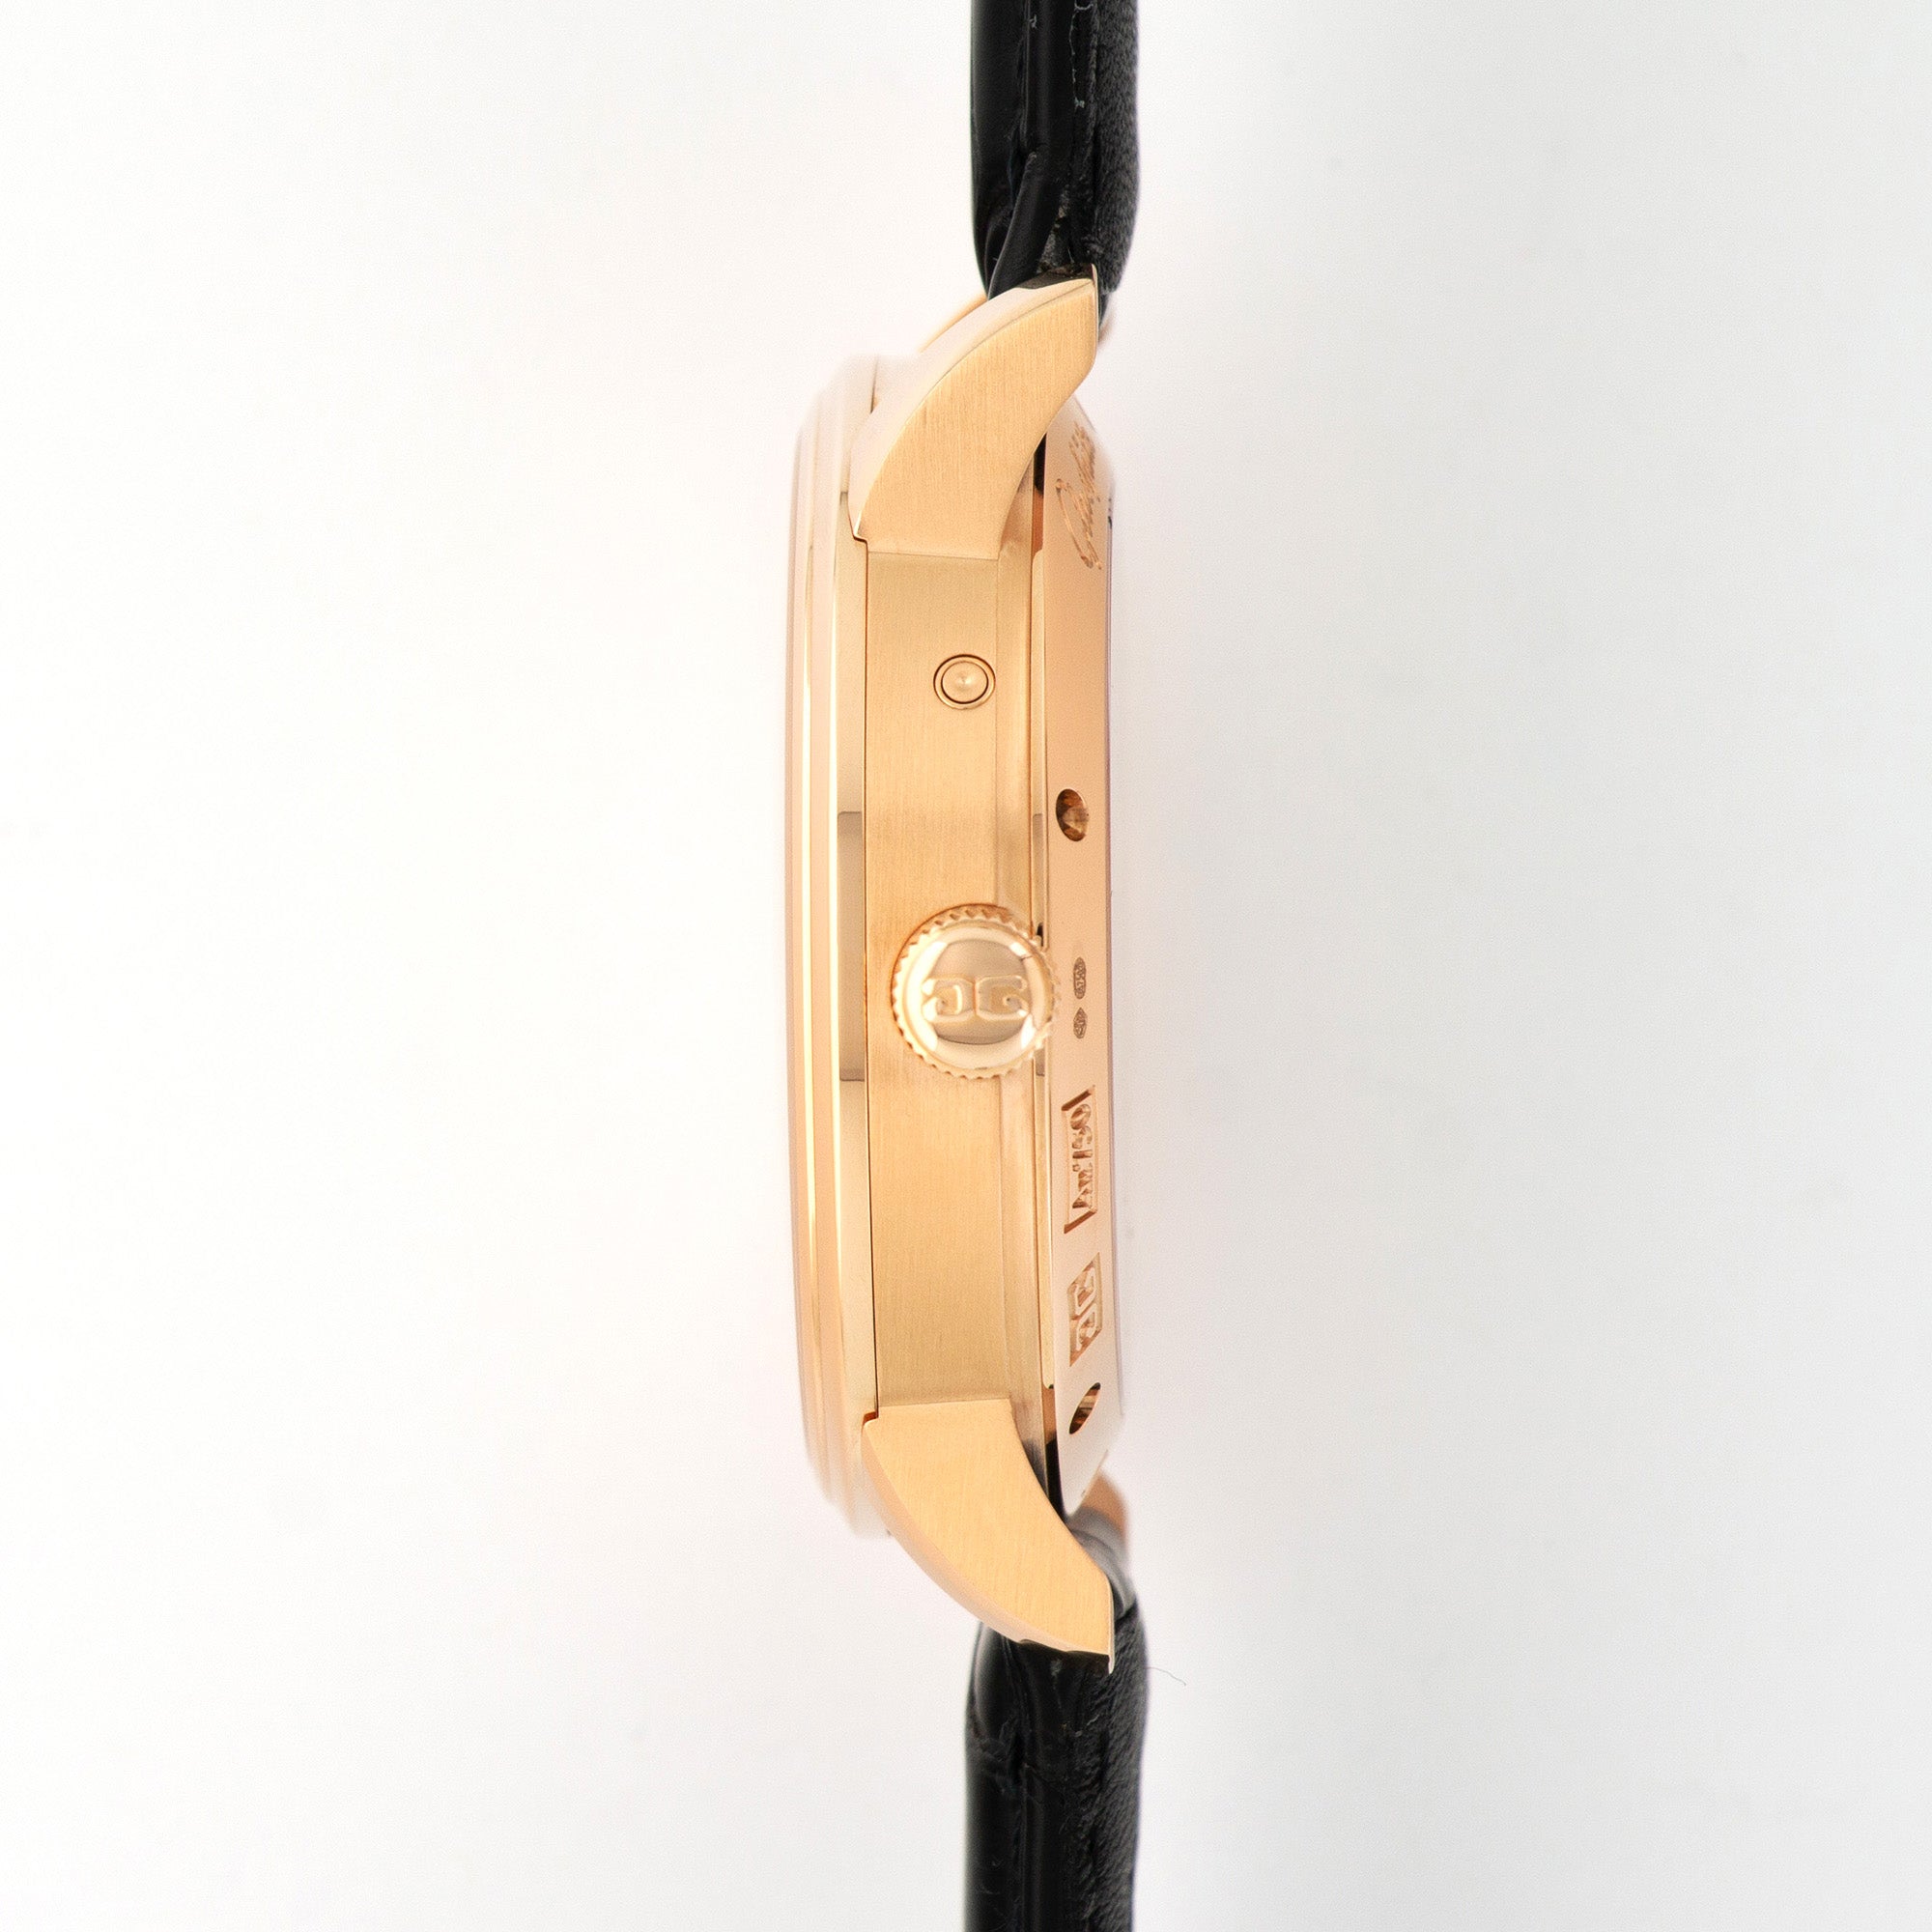 Glashutte - Glashutte Rose Gold Senator Panorama Watch - The Keystone Watches